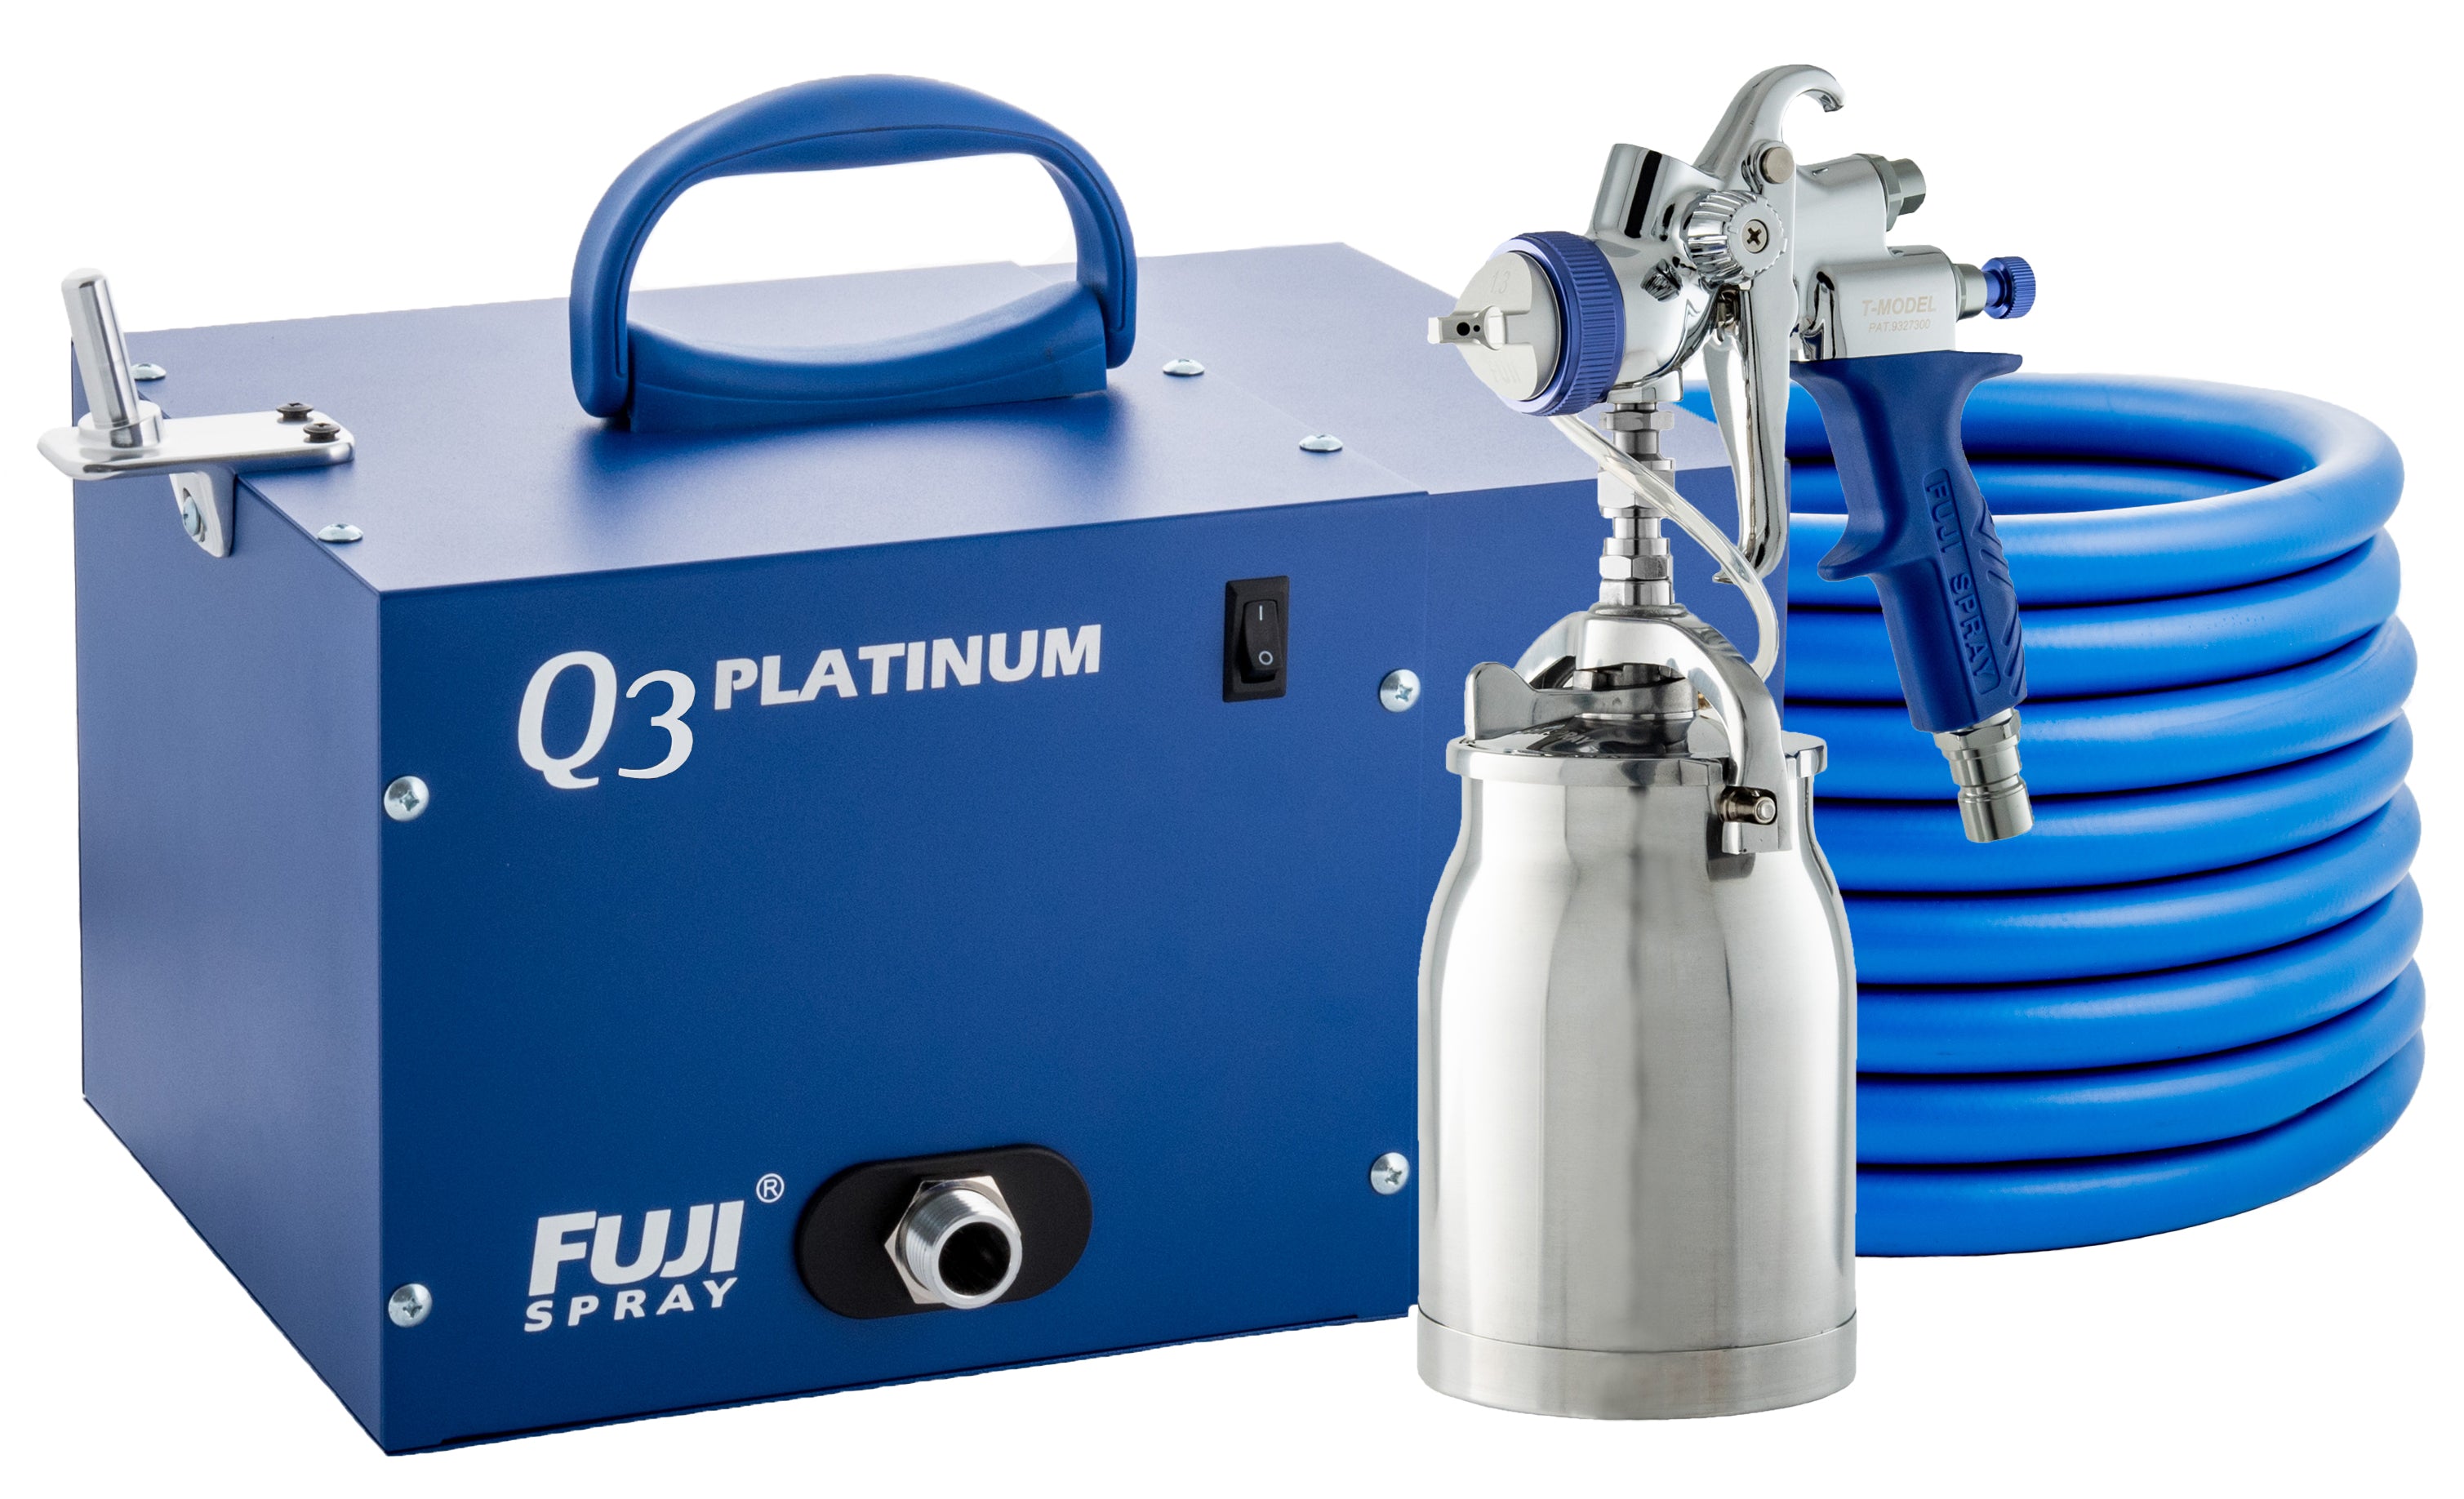 Fuji Spray Q Platinum™ Turbine System with Spray Gun, Hose, and Turbine